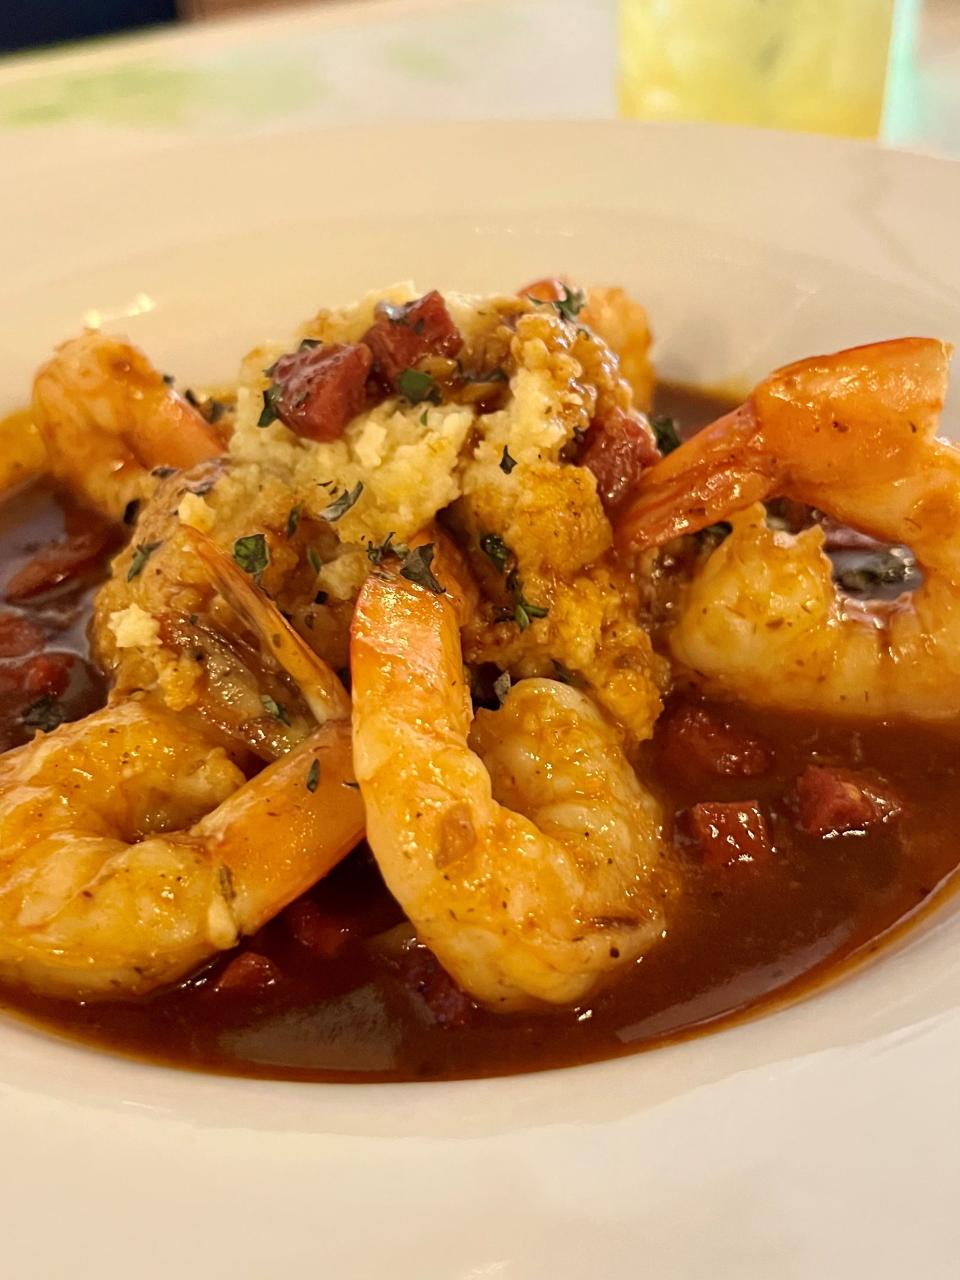 Killer shrimp & grits is on the brunch menu at Sage on 47th in cape Coral.